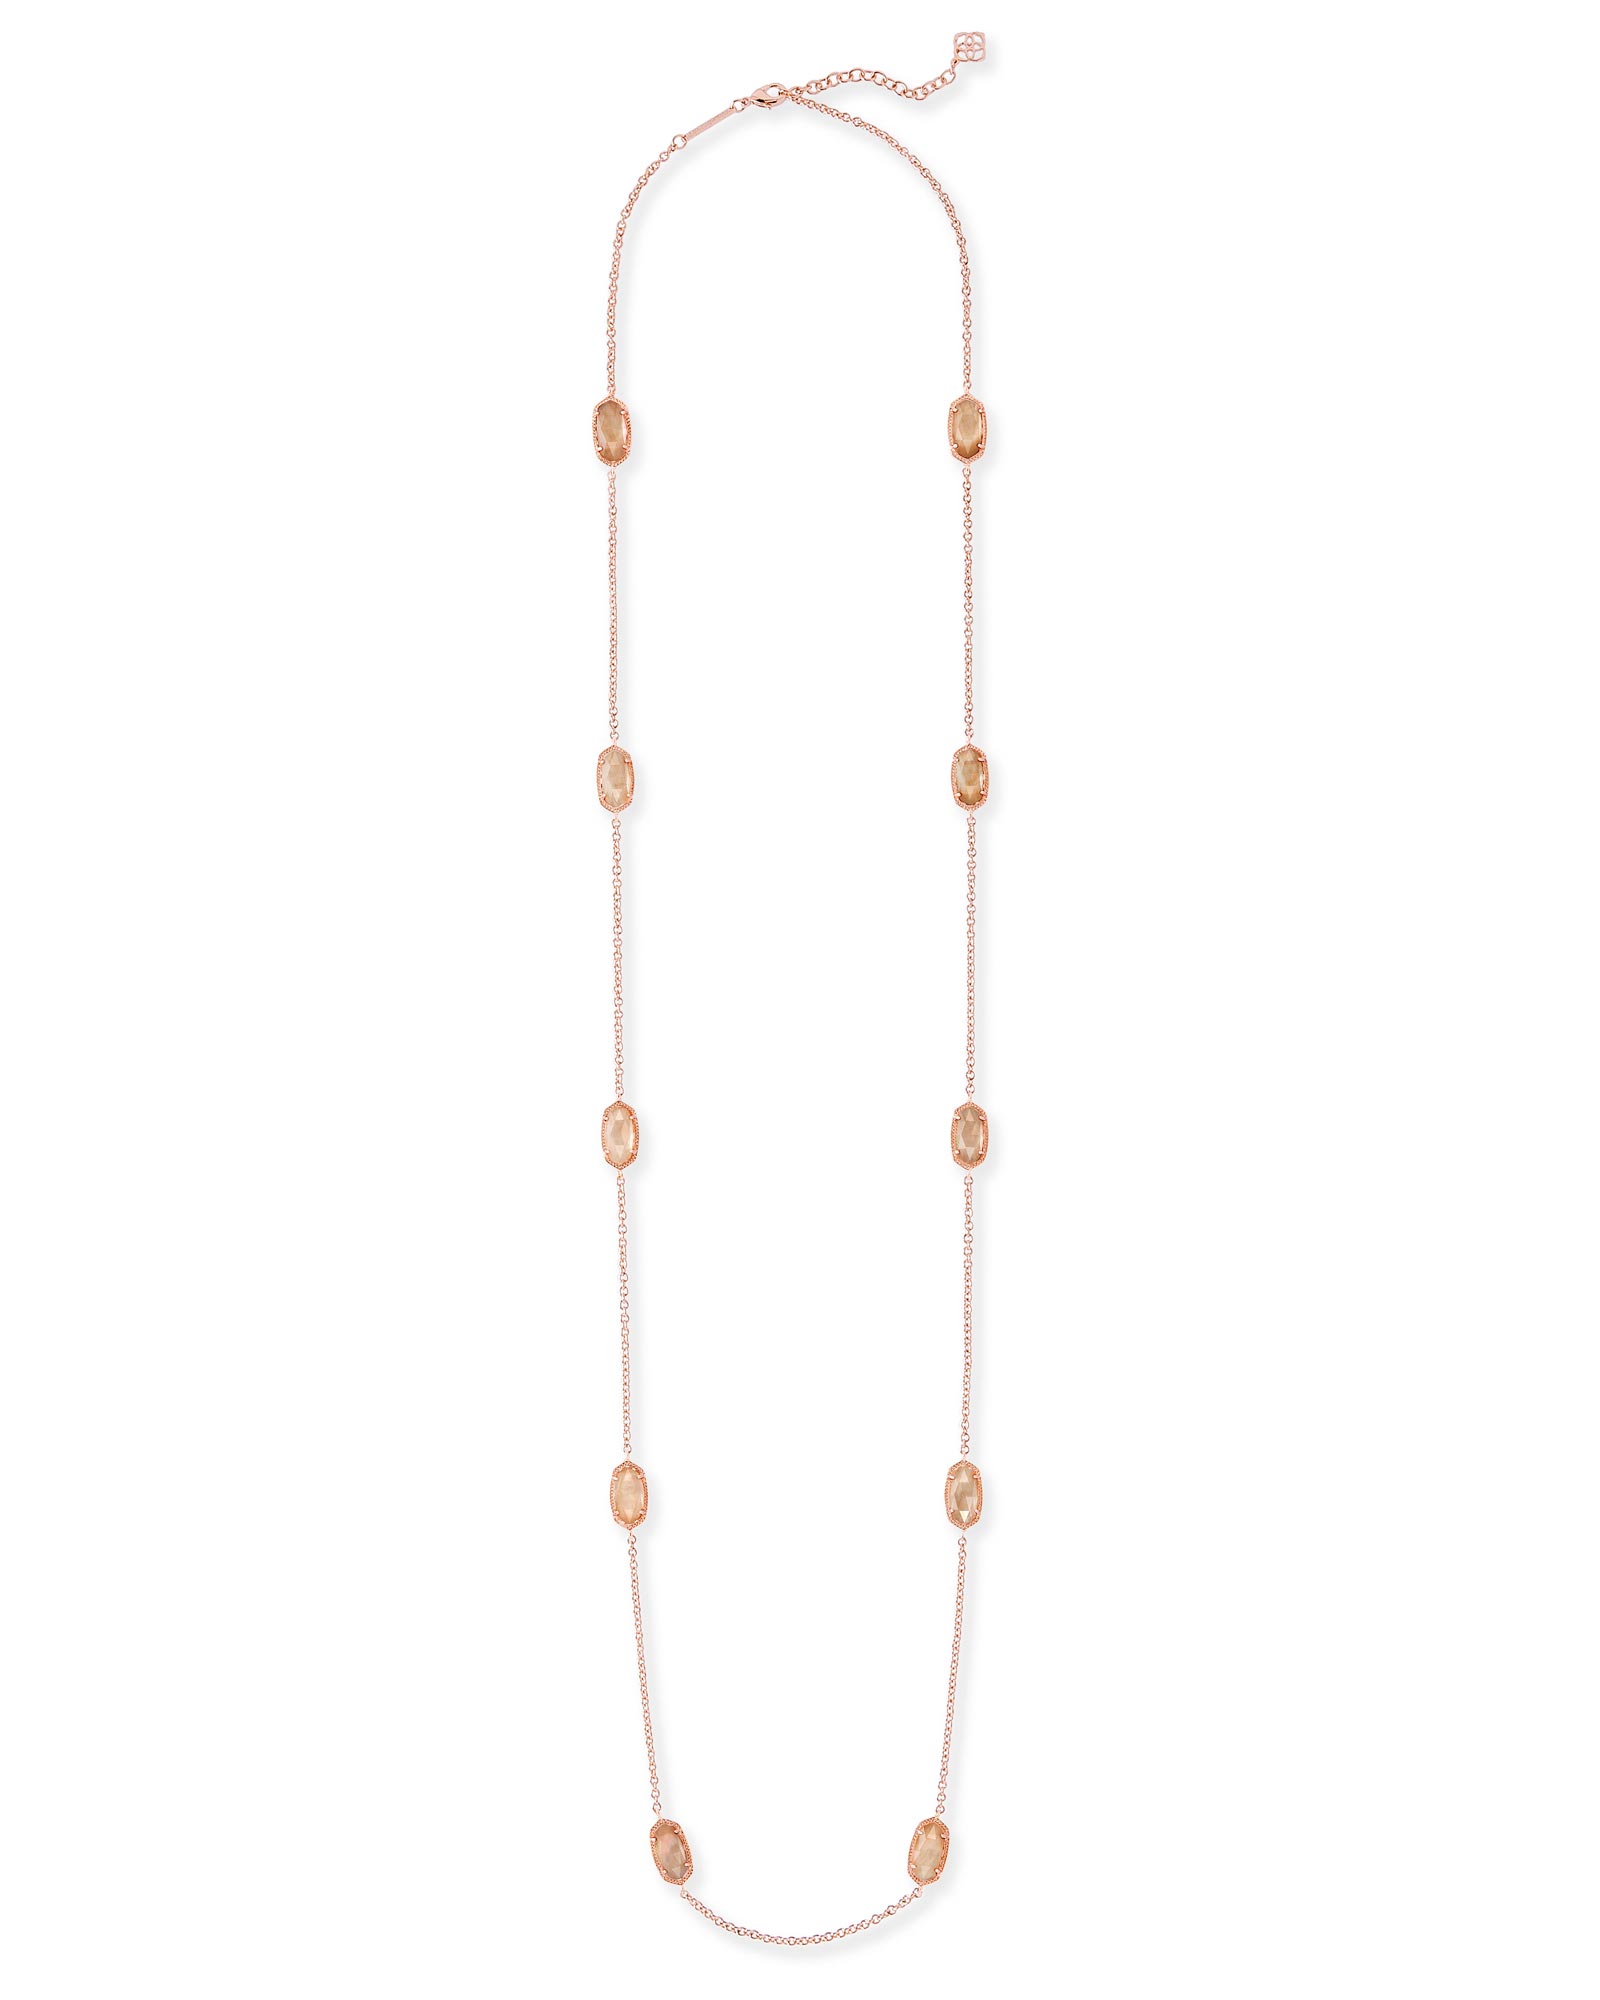 Kellie Long Necklace in Rose Gold | Kendra Scott Jewelry